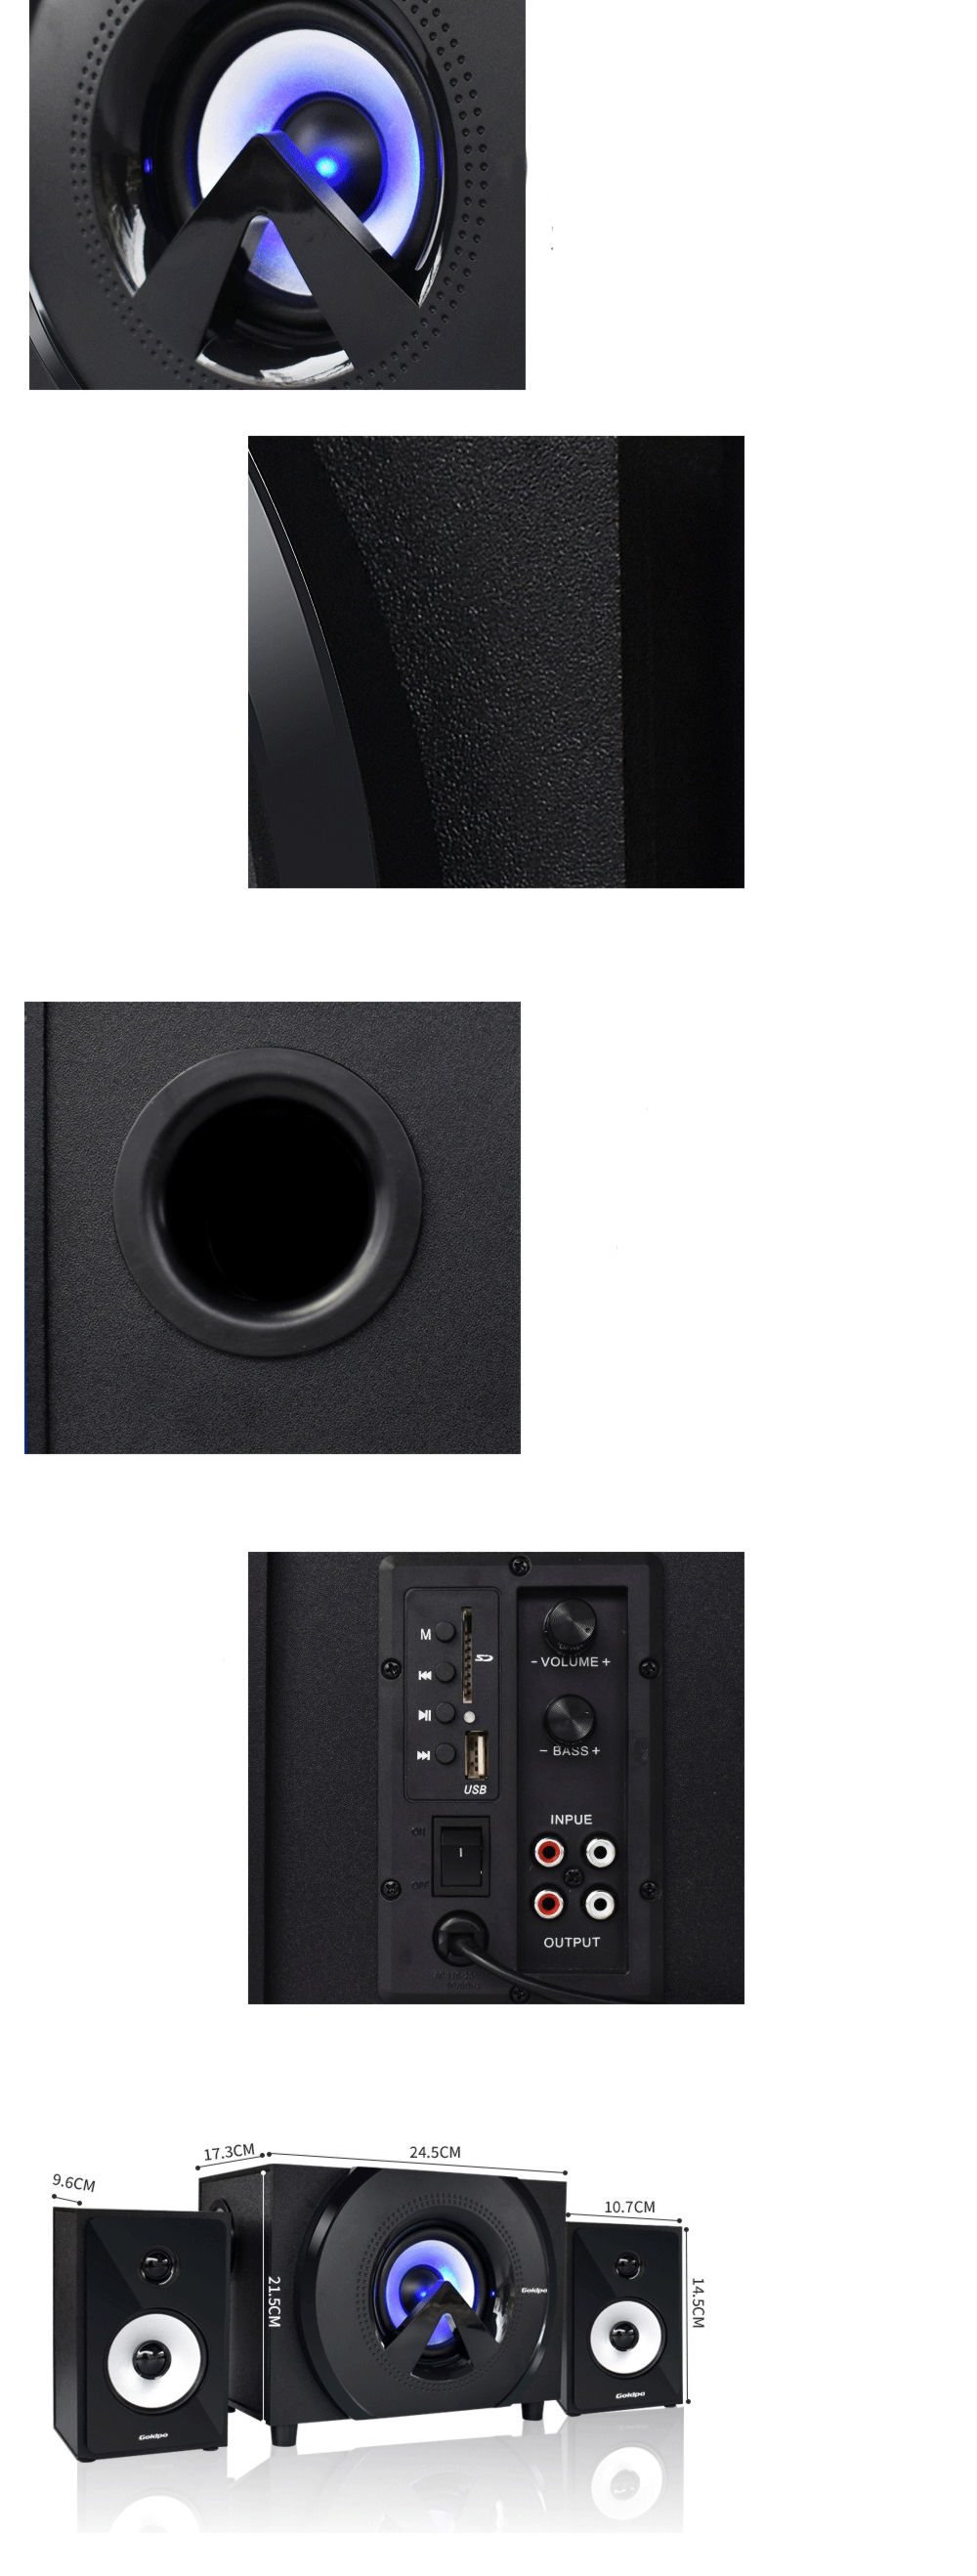 Goldpo-A150-50-bluetooth-Speaker-Audio-Home-Desktop-Subwoofer-21-Wooden-Speaker-HiFi-Sound-Quality-D-1791555-3